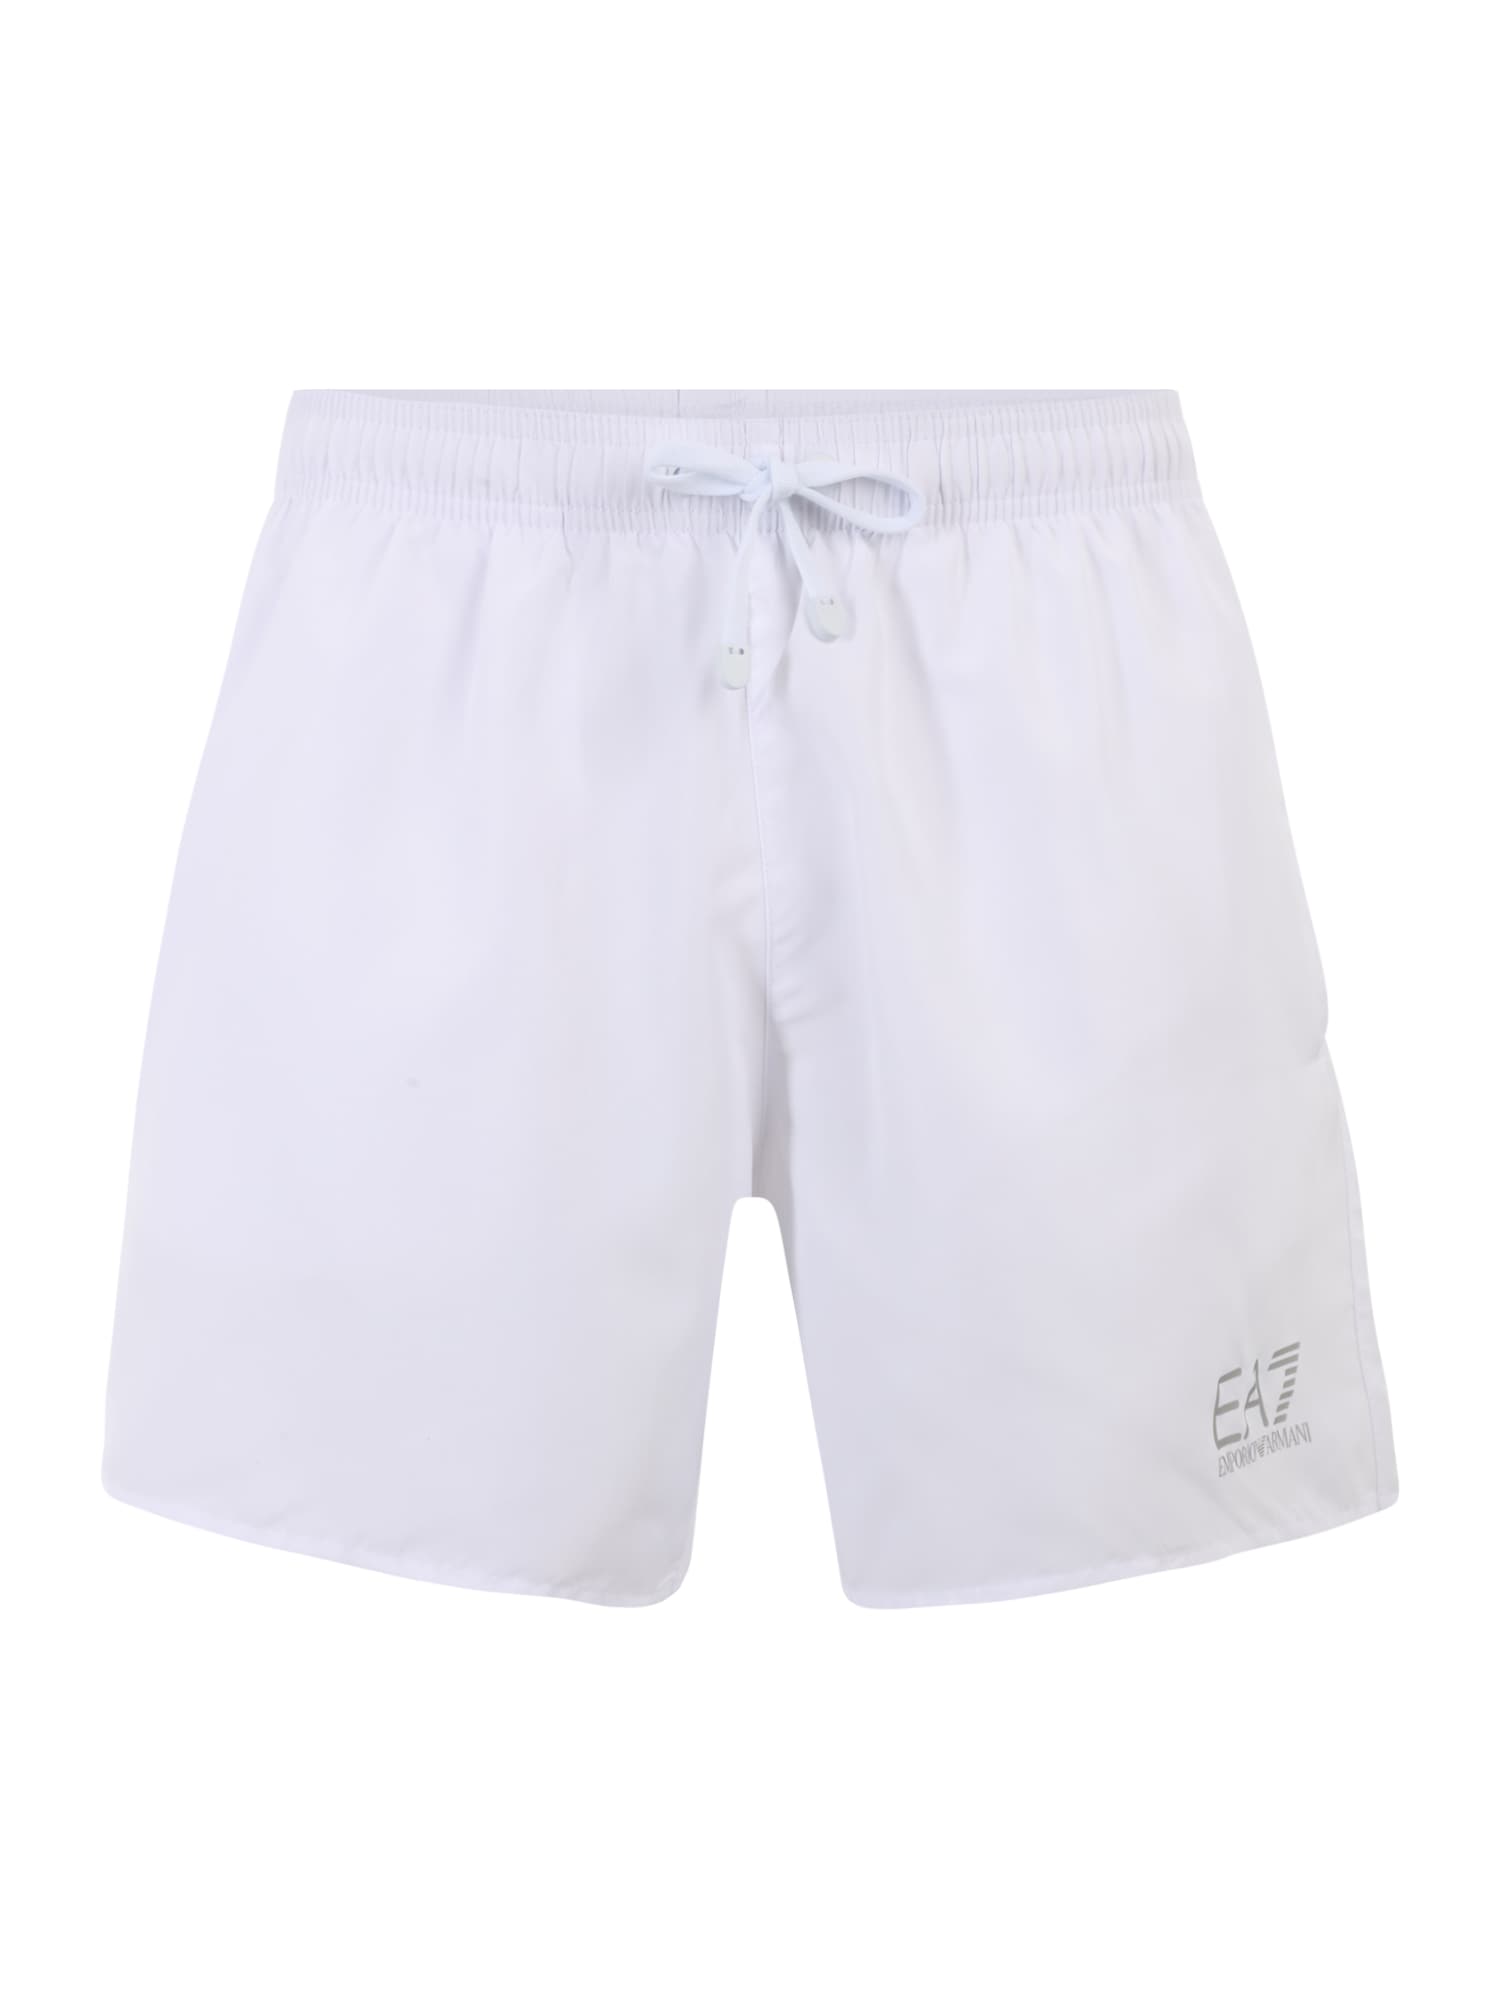 EA7 Emporio Armani Športne kopalne hlače  siva / bela